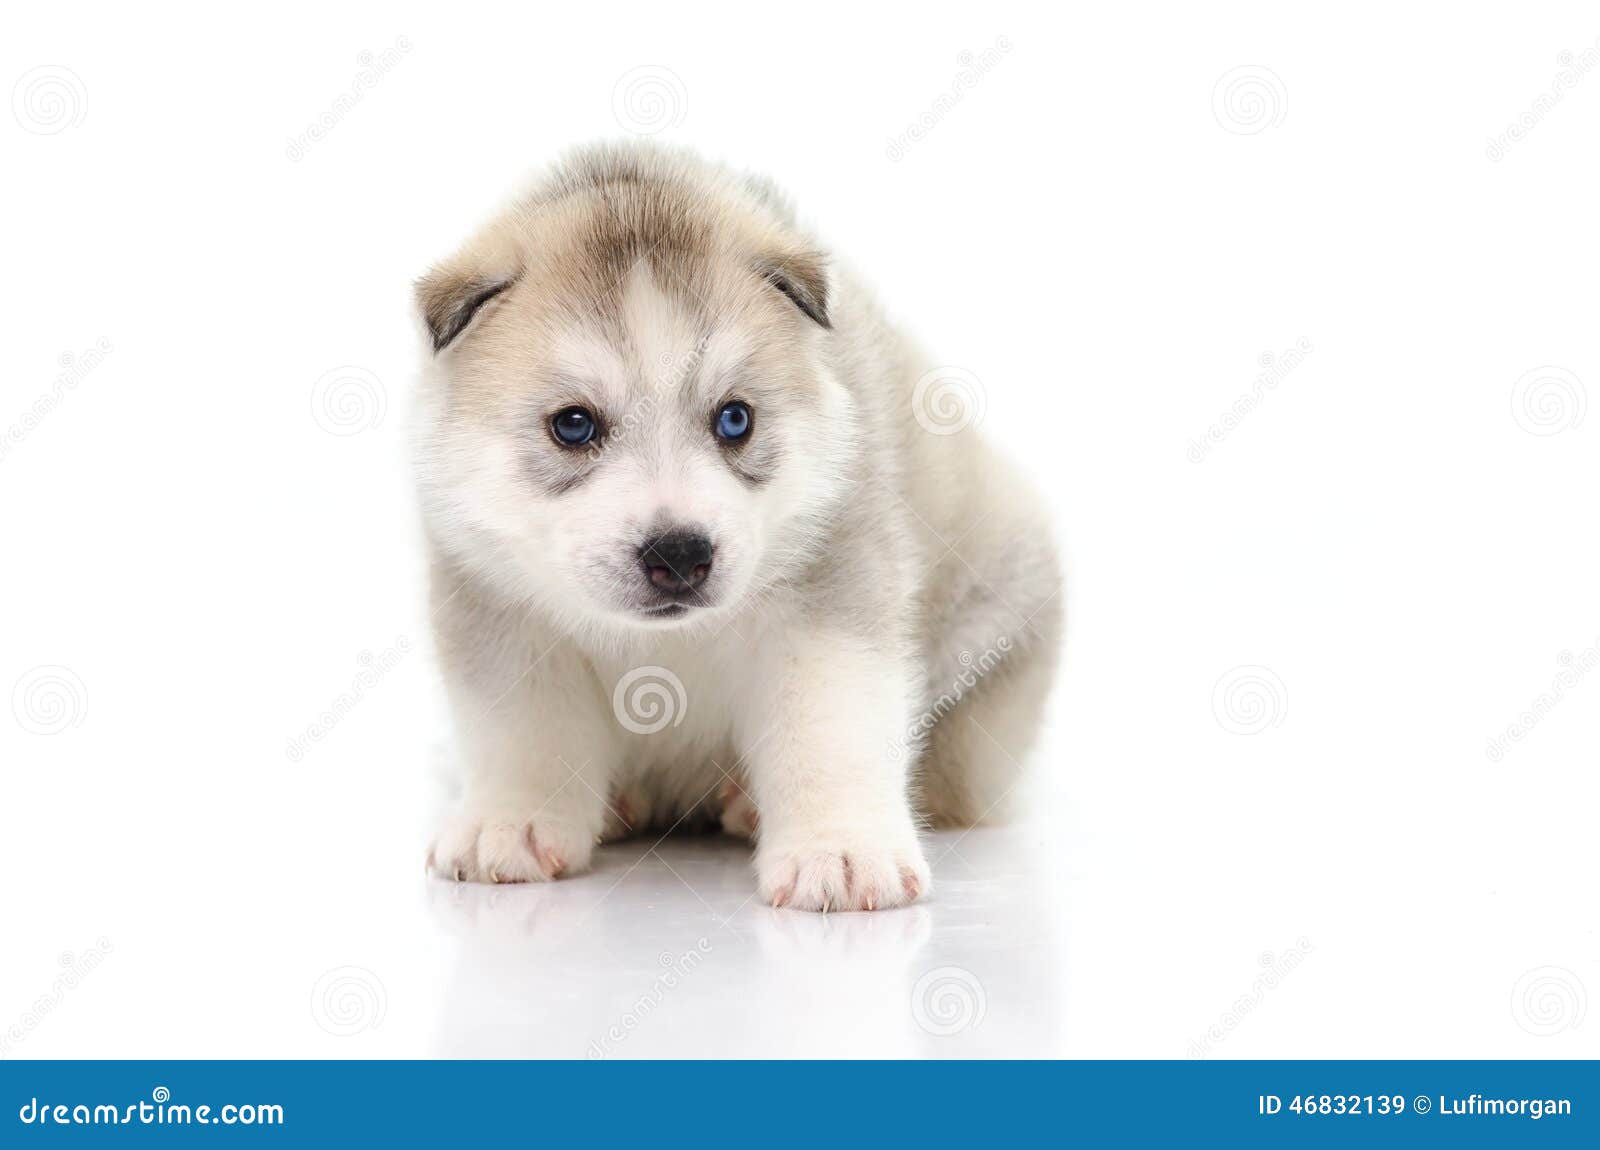 cute baby white husky puppies